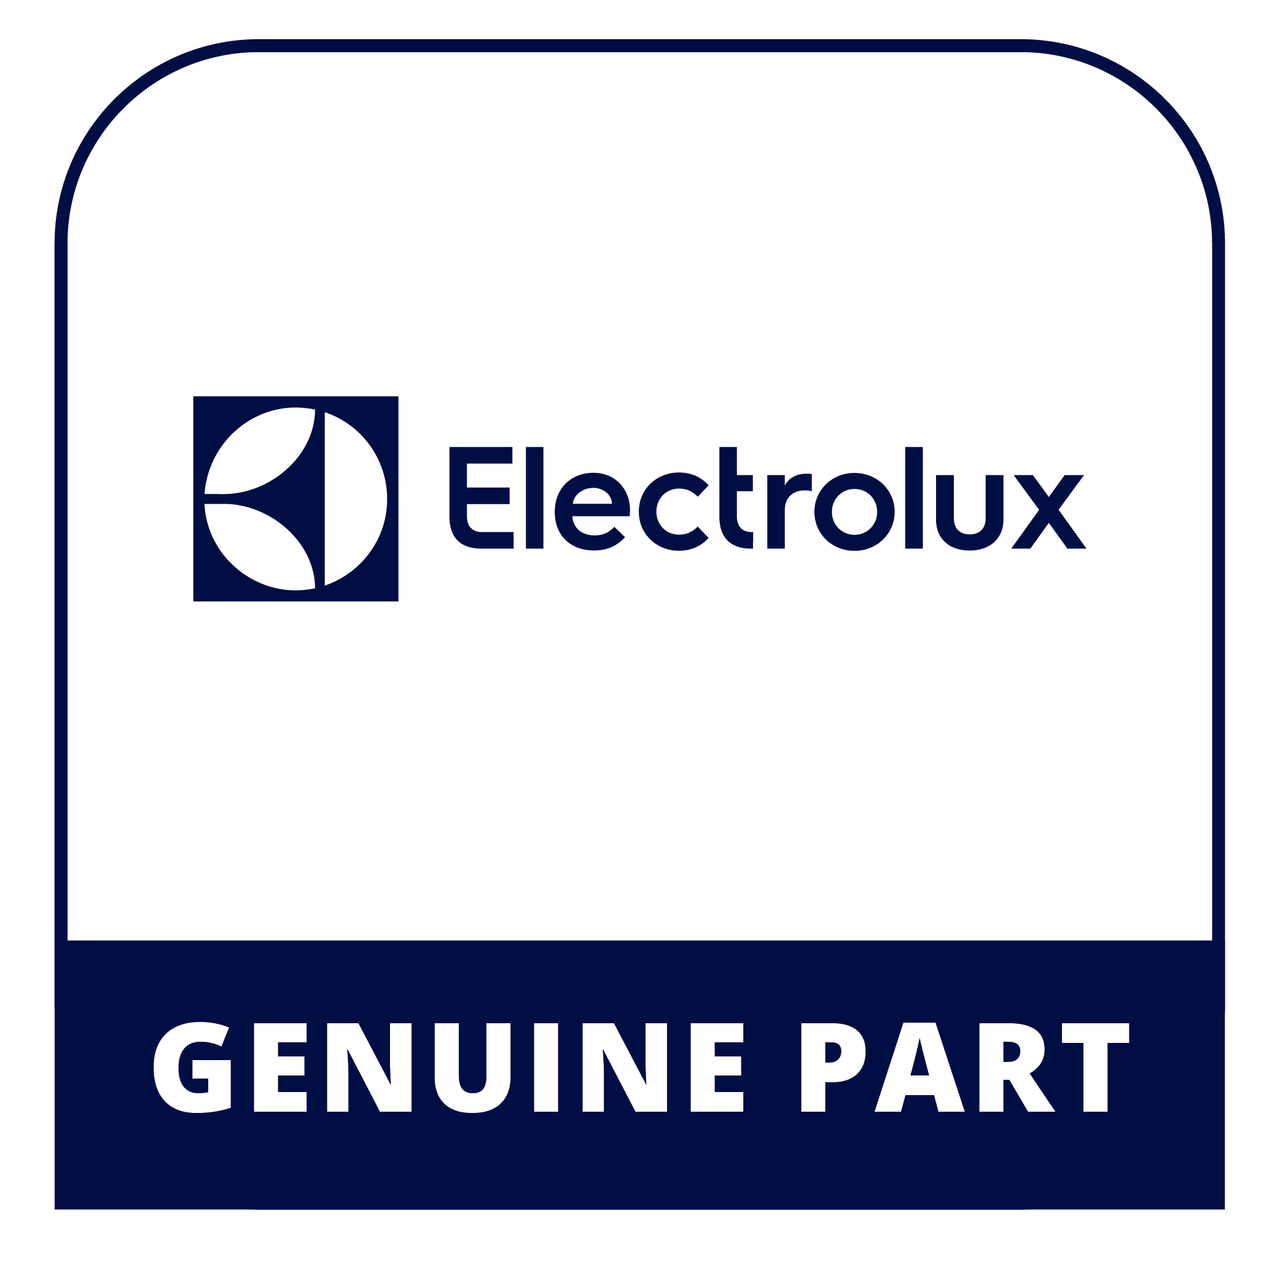 Frigidaire - Electrolux 316575948 - Hinge - Genuine Electrolux Part